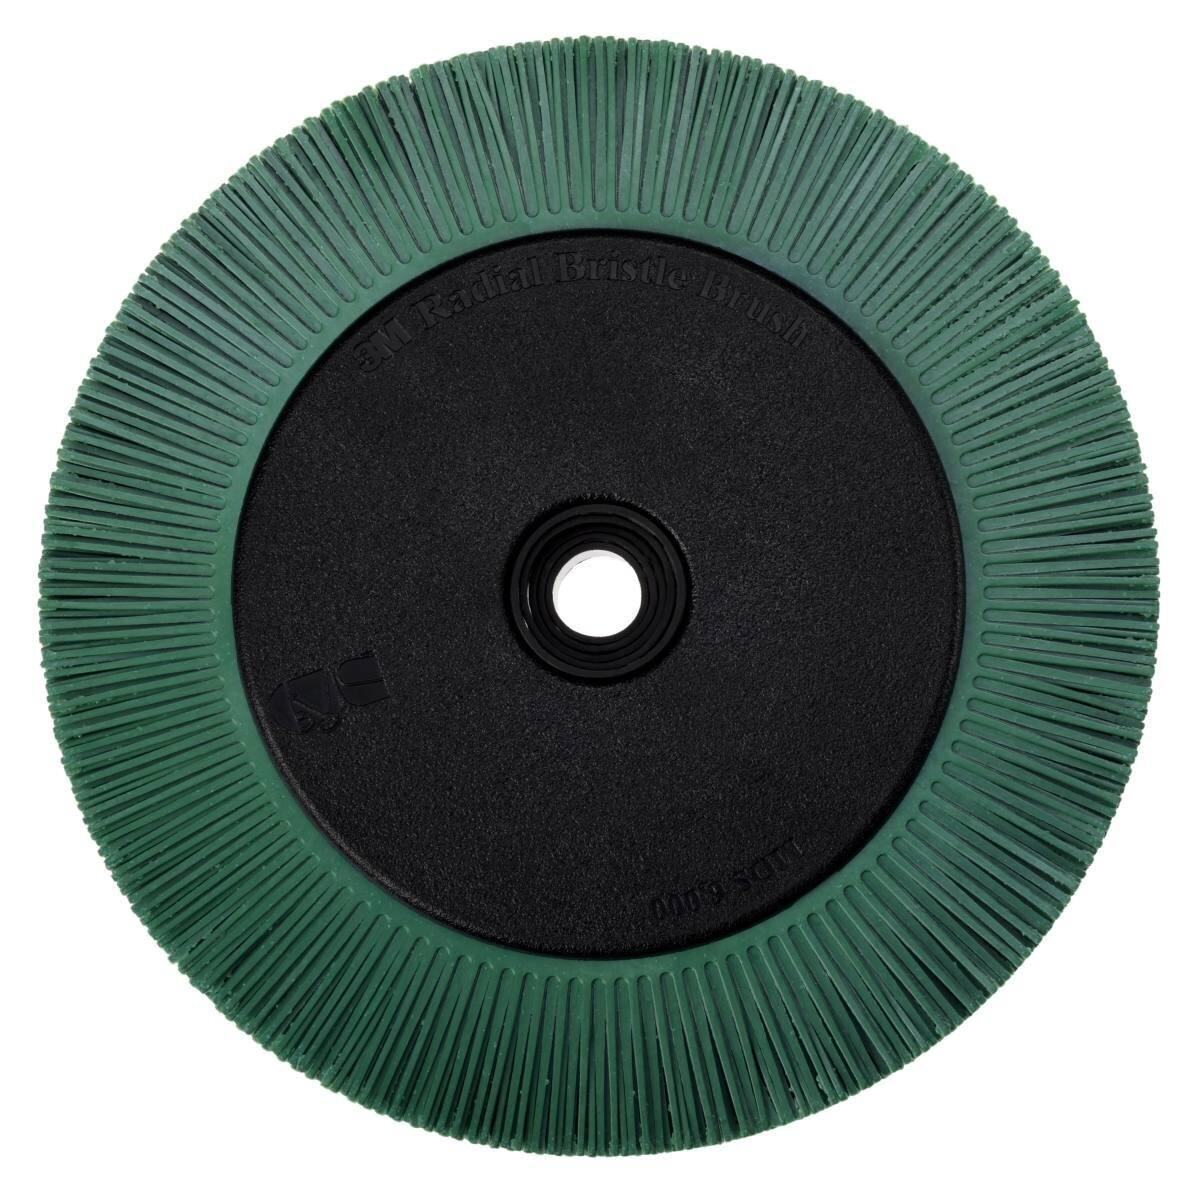 3M Scotch-Brite Radial Bristle Disc BB-ZB avec bride, vert, 203,2 mm, P50, type S #33081